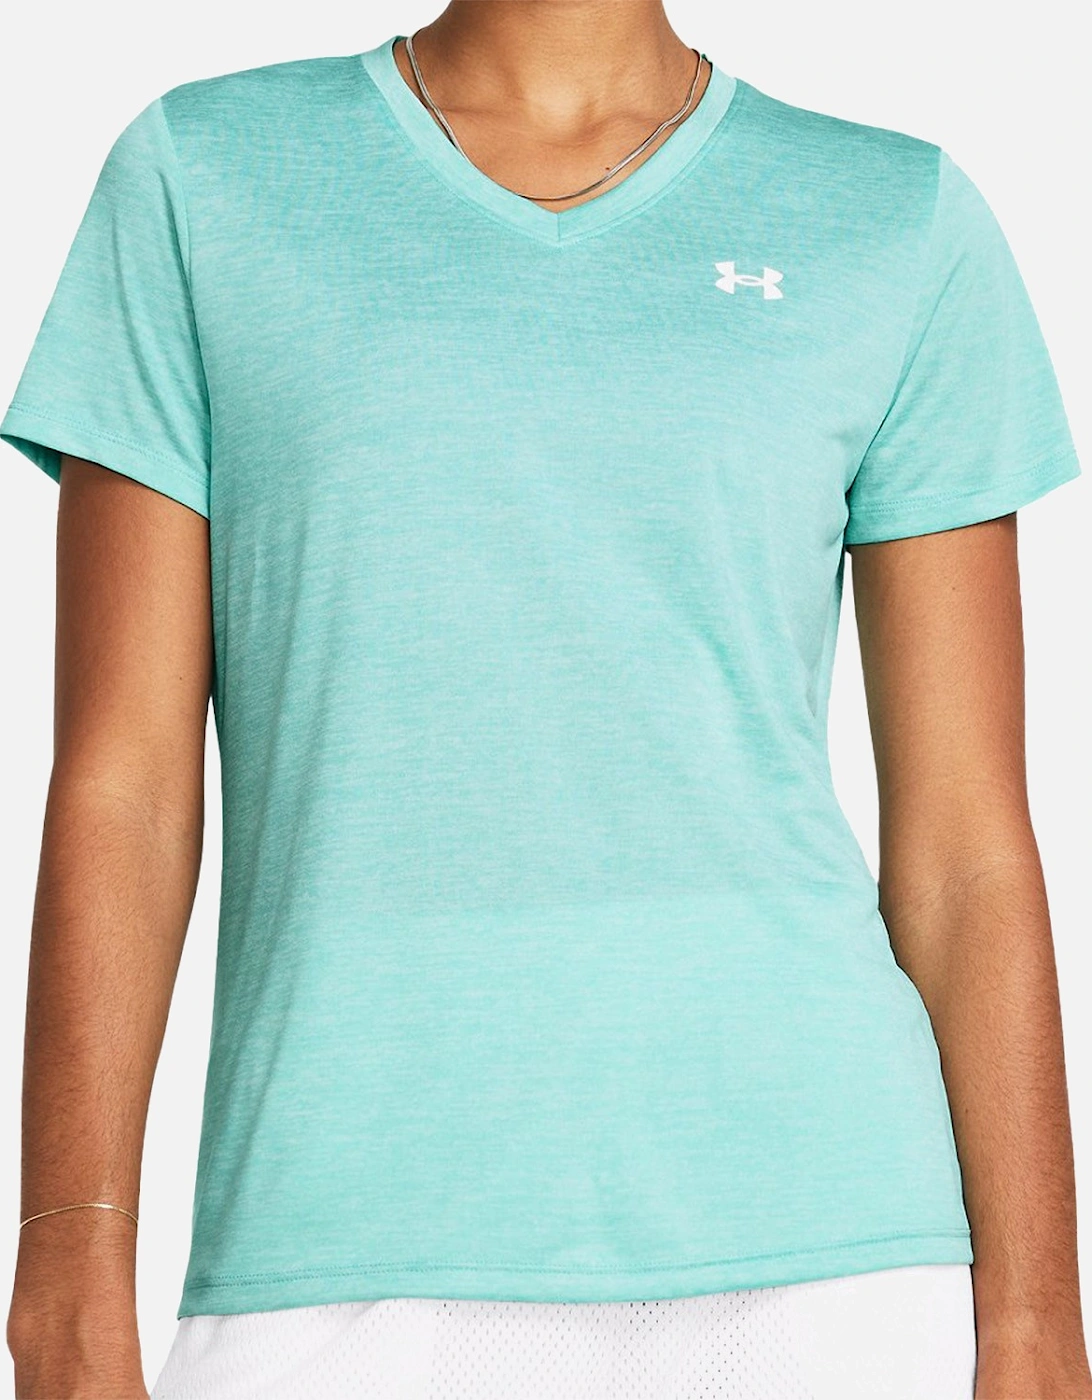 Womens Tech Twist V-Neck T-Shirt (Turquoise)